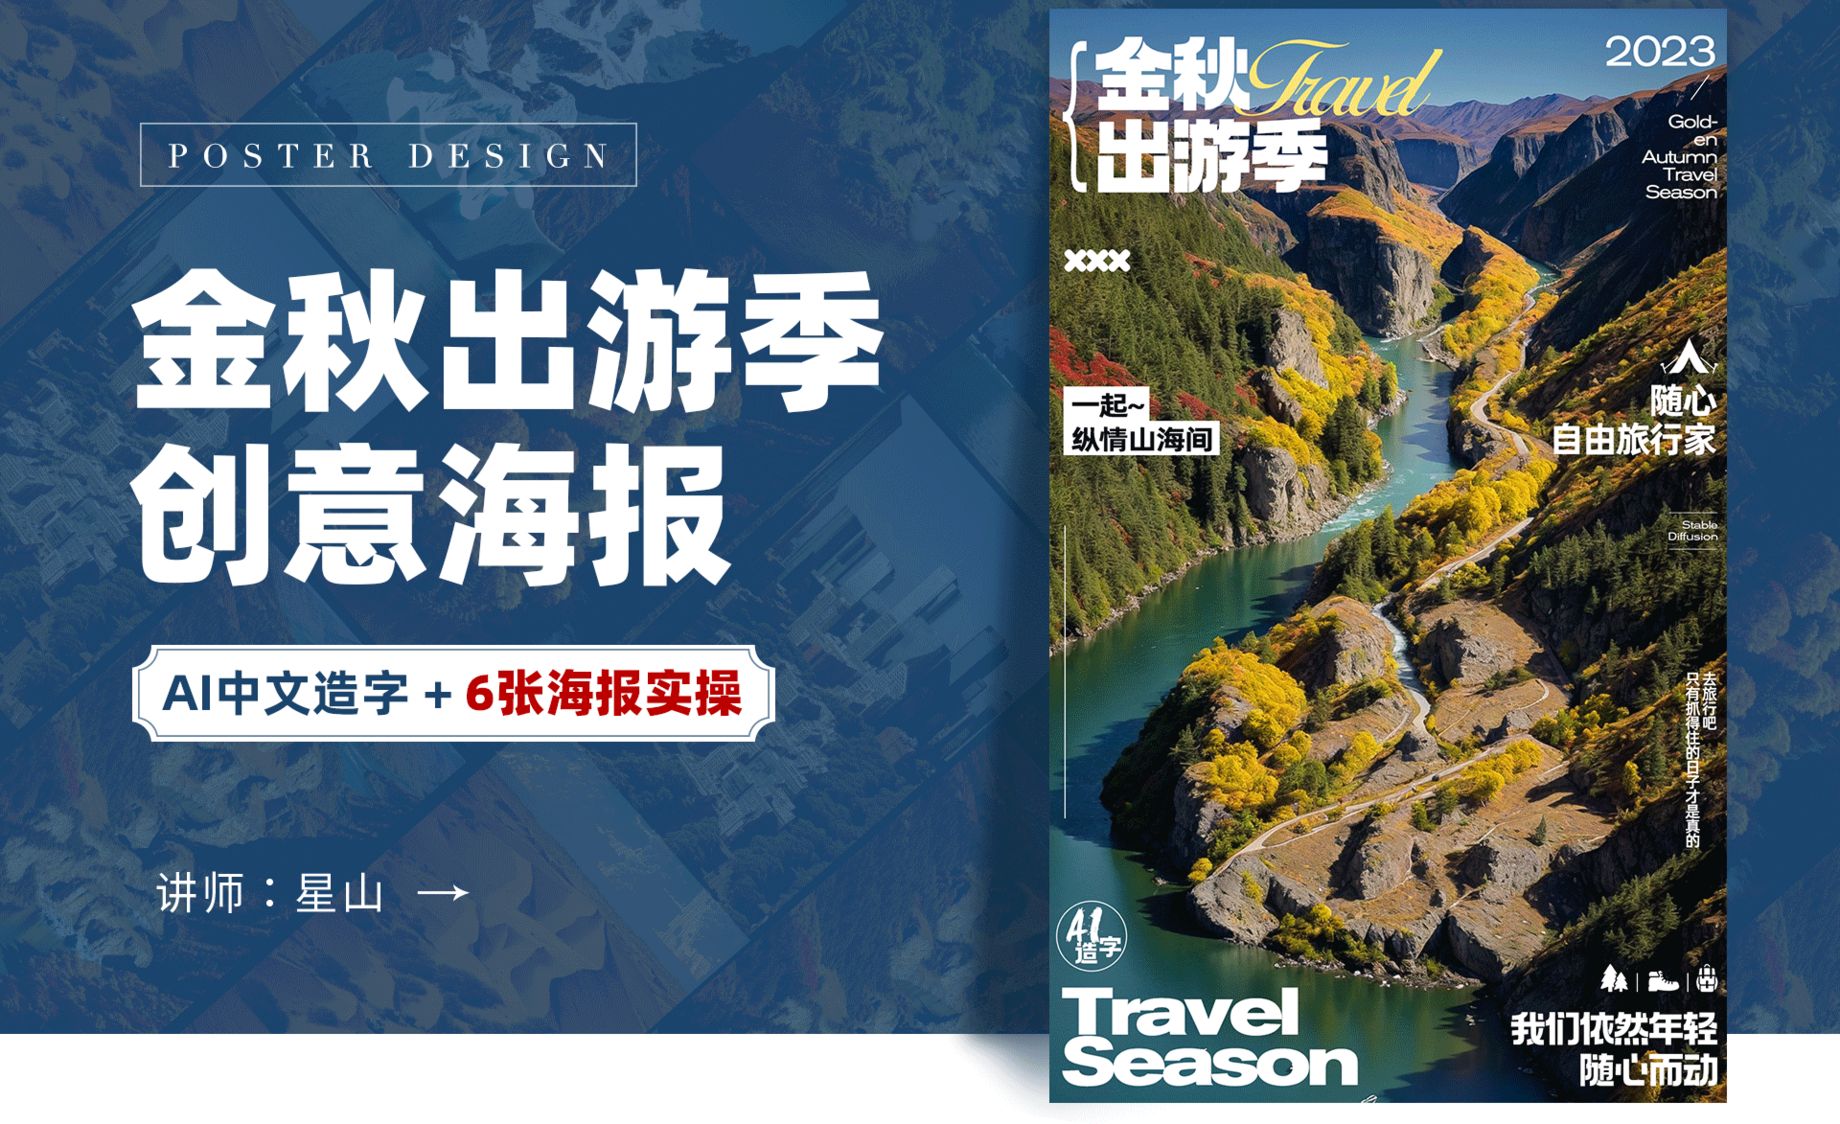 PS+SD-【金秋出游季】旅游类创意海报